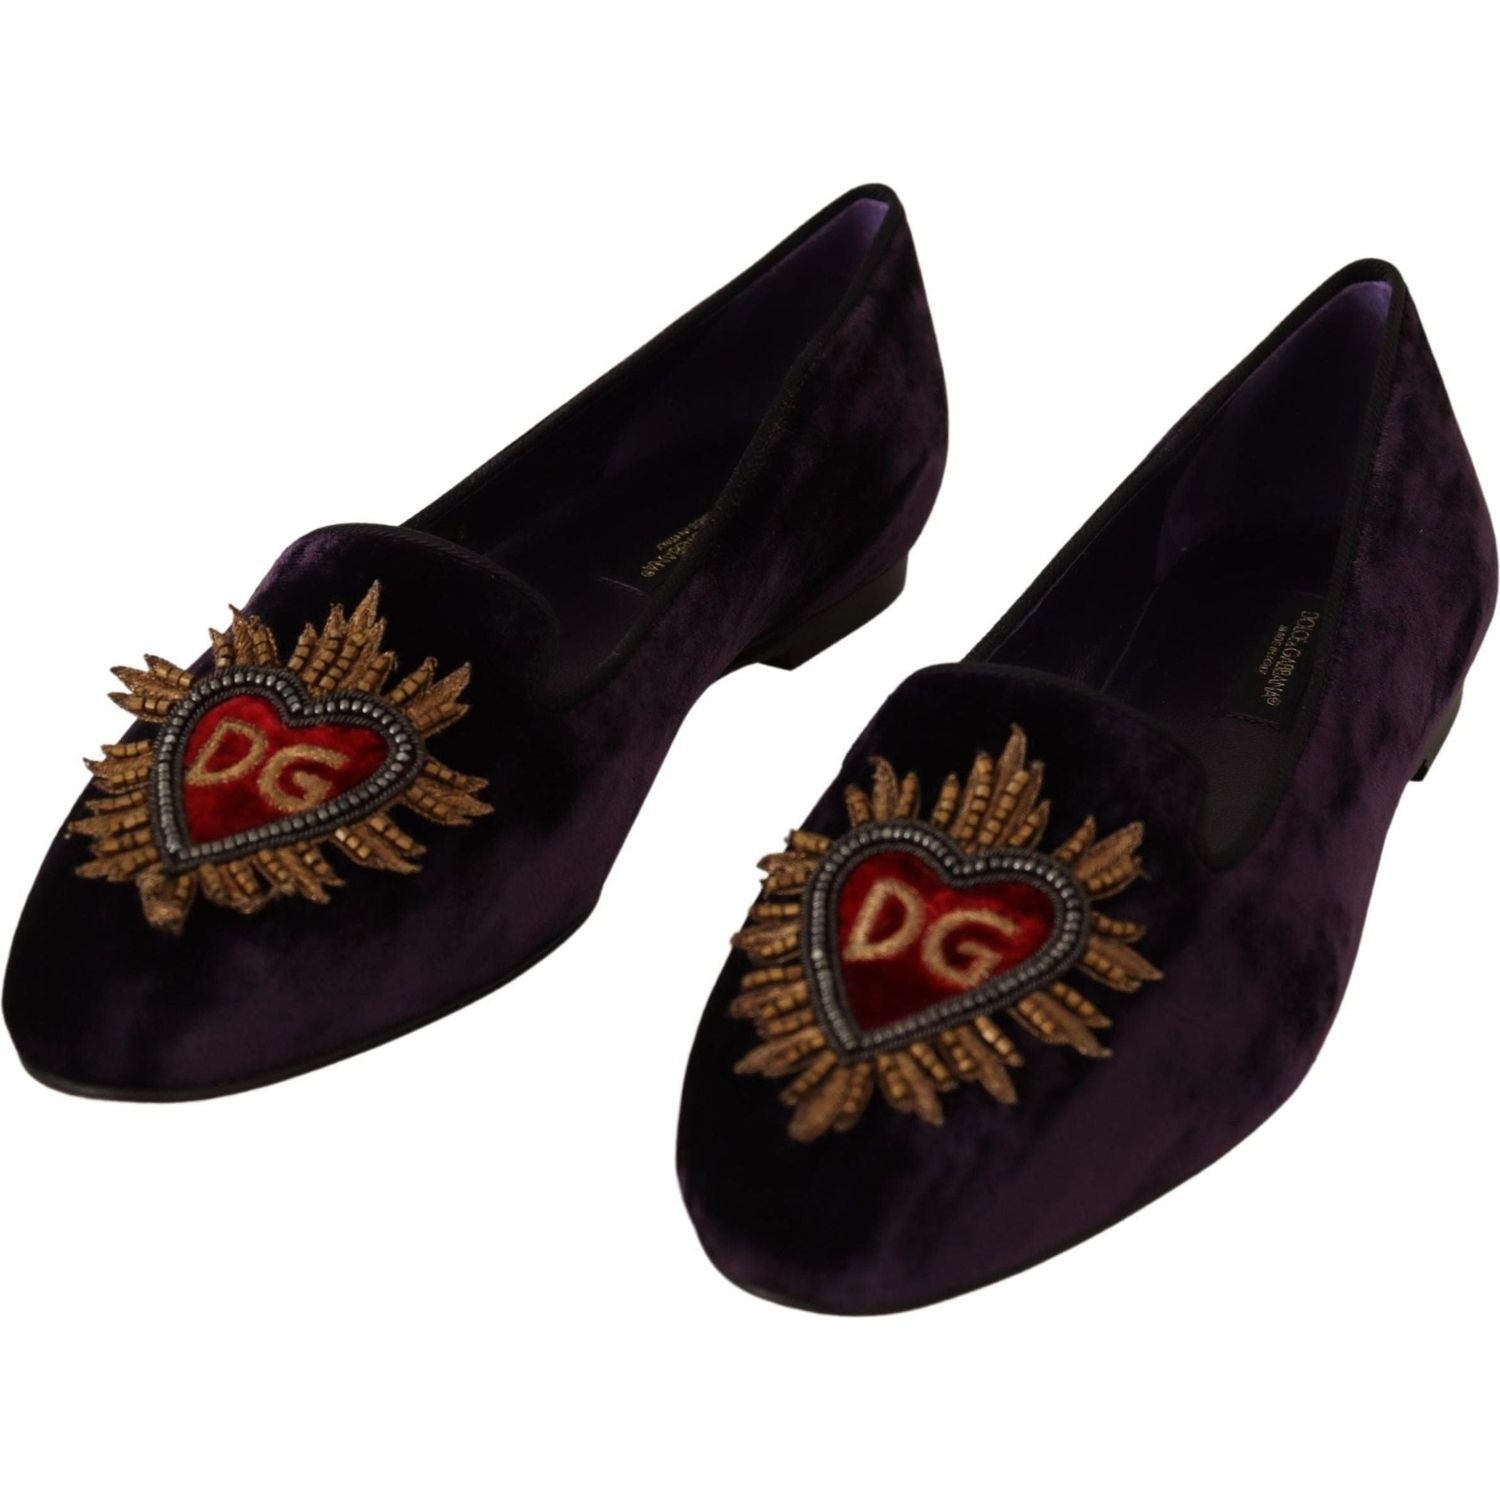 Dolce & Gabbana | Purple Velvet DG Heart Loafers Flats Shoes | 359.00 - McRichard Designer Brands